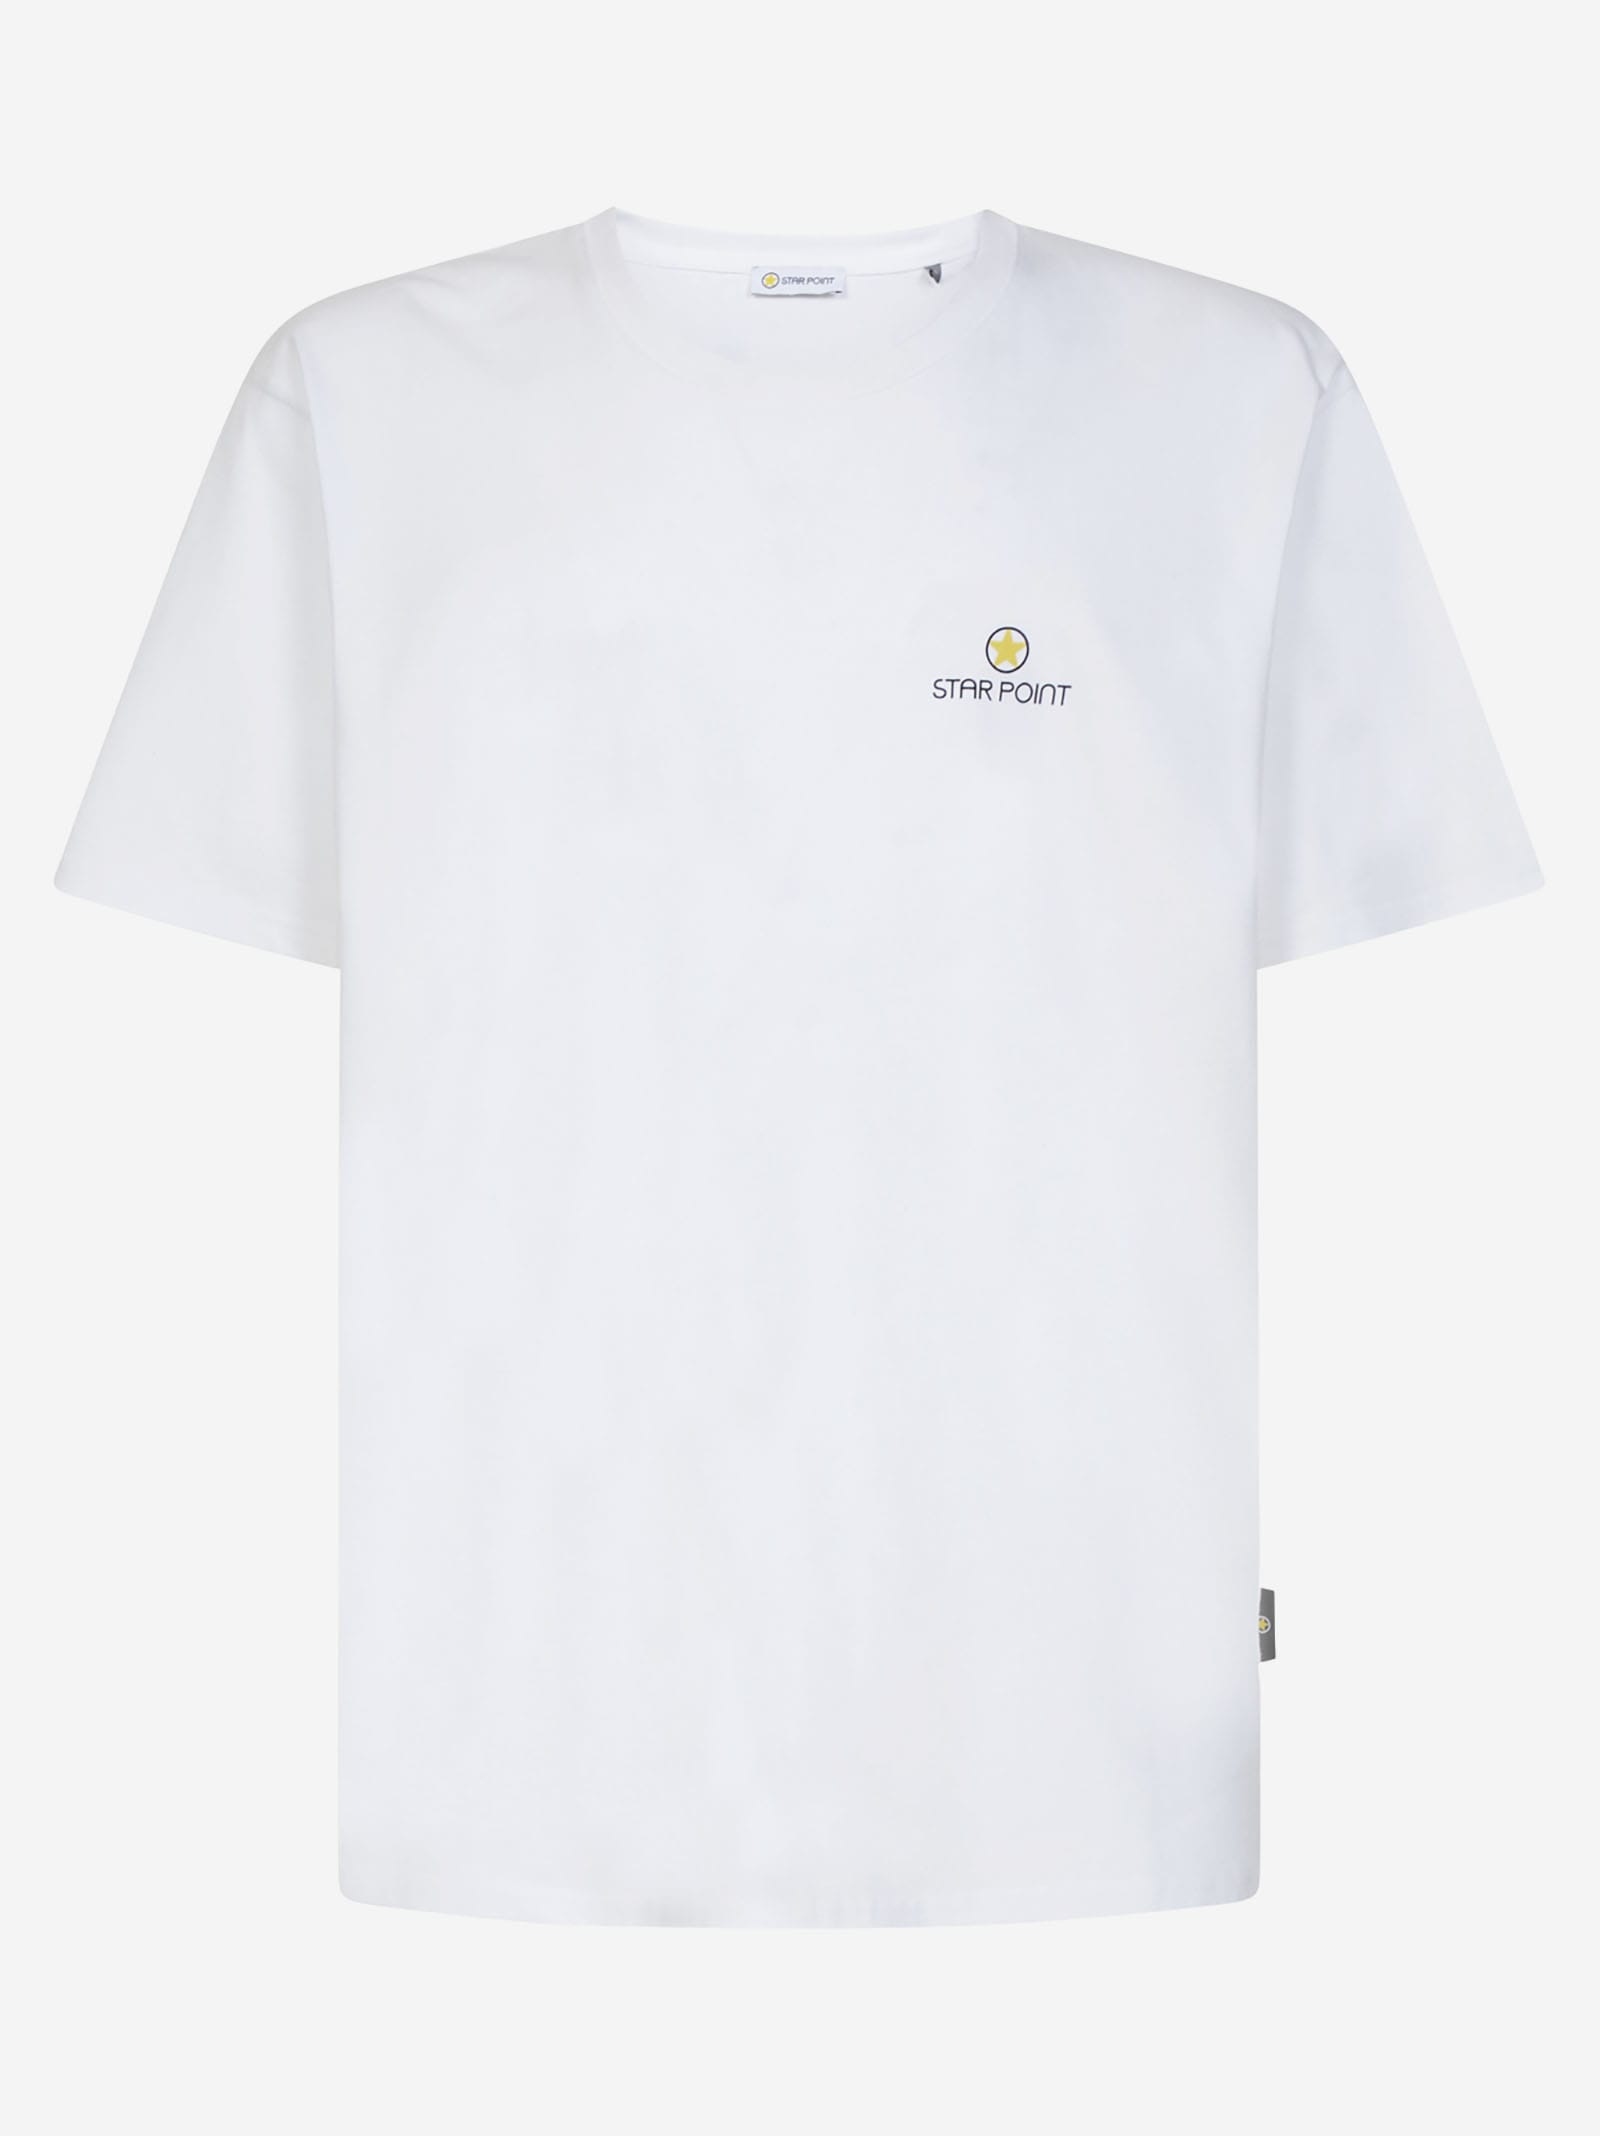 Star Point T-shirt